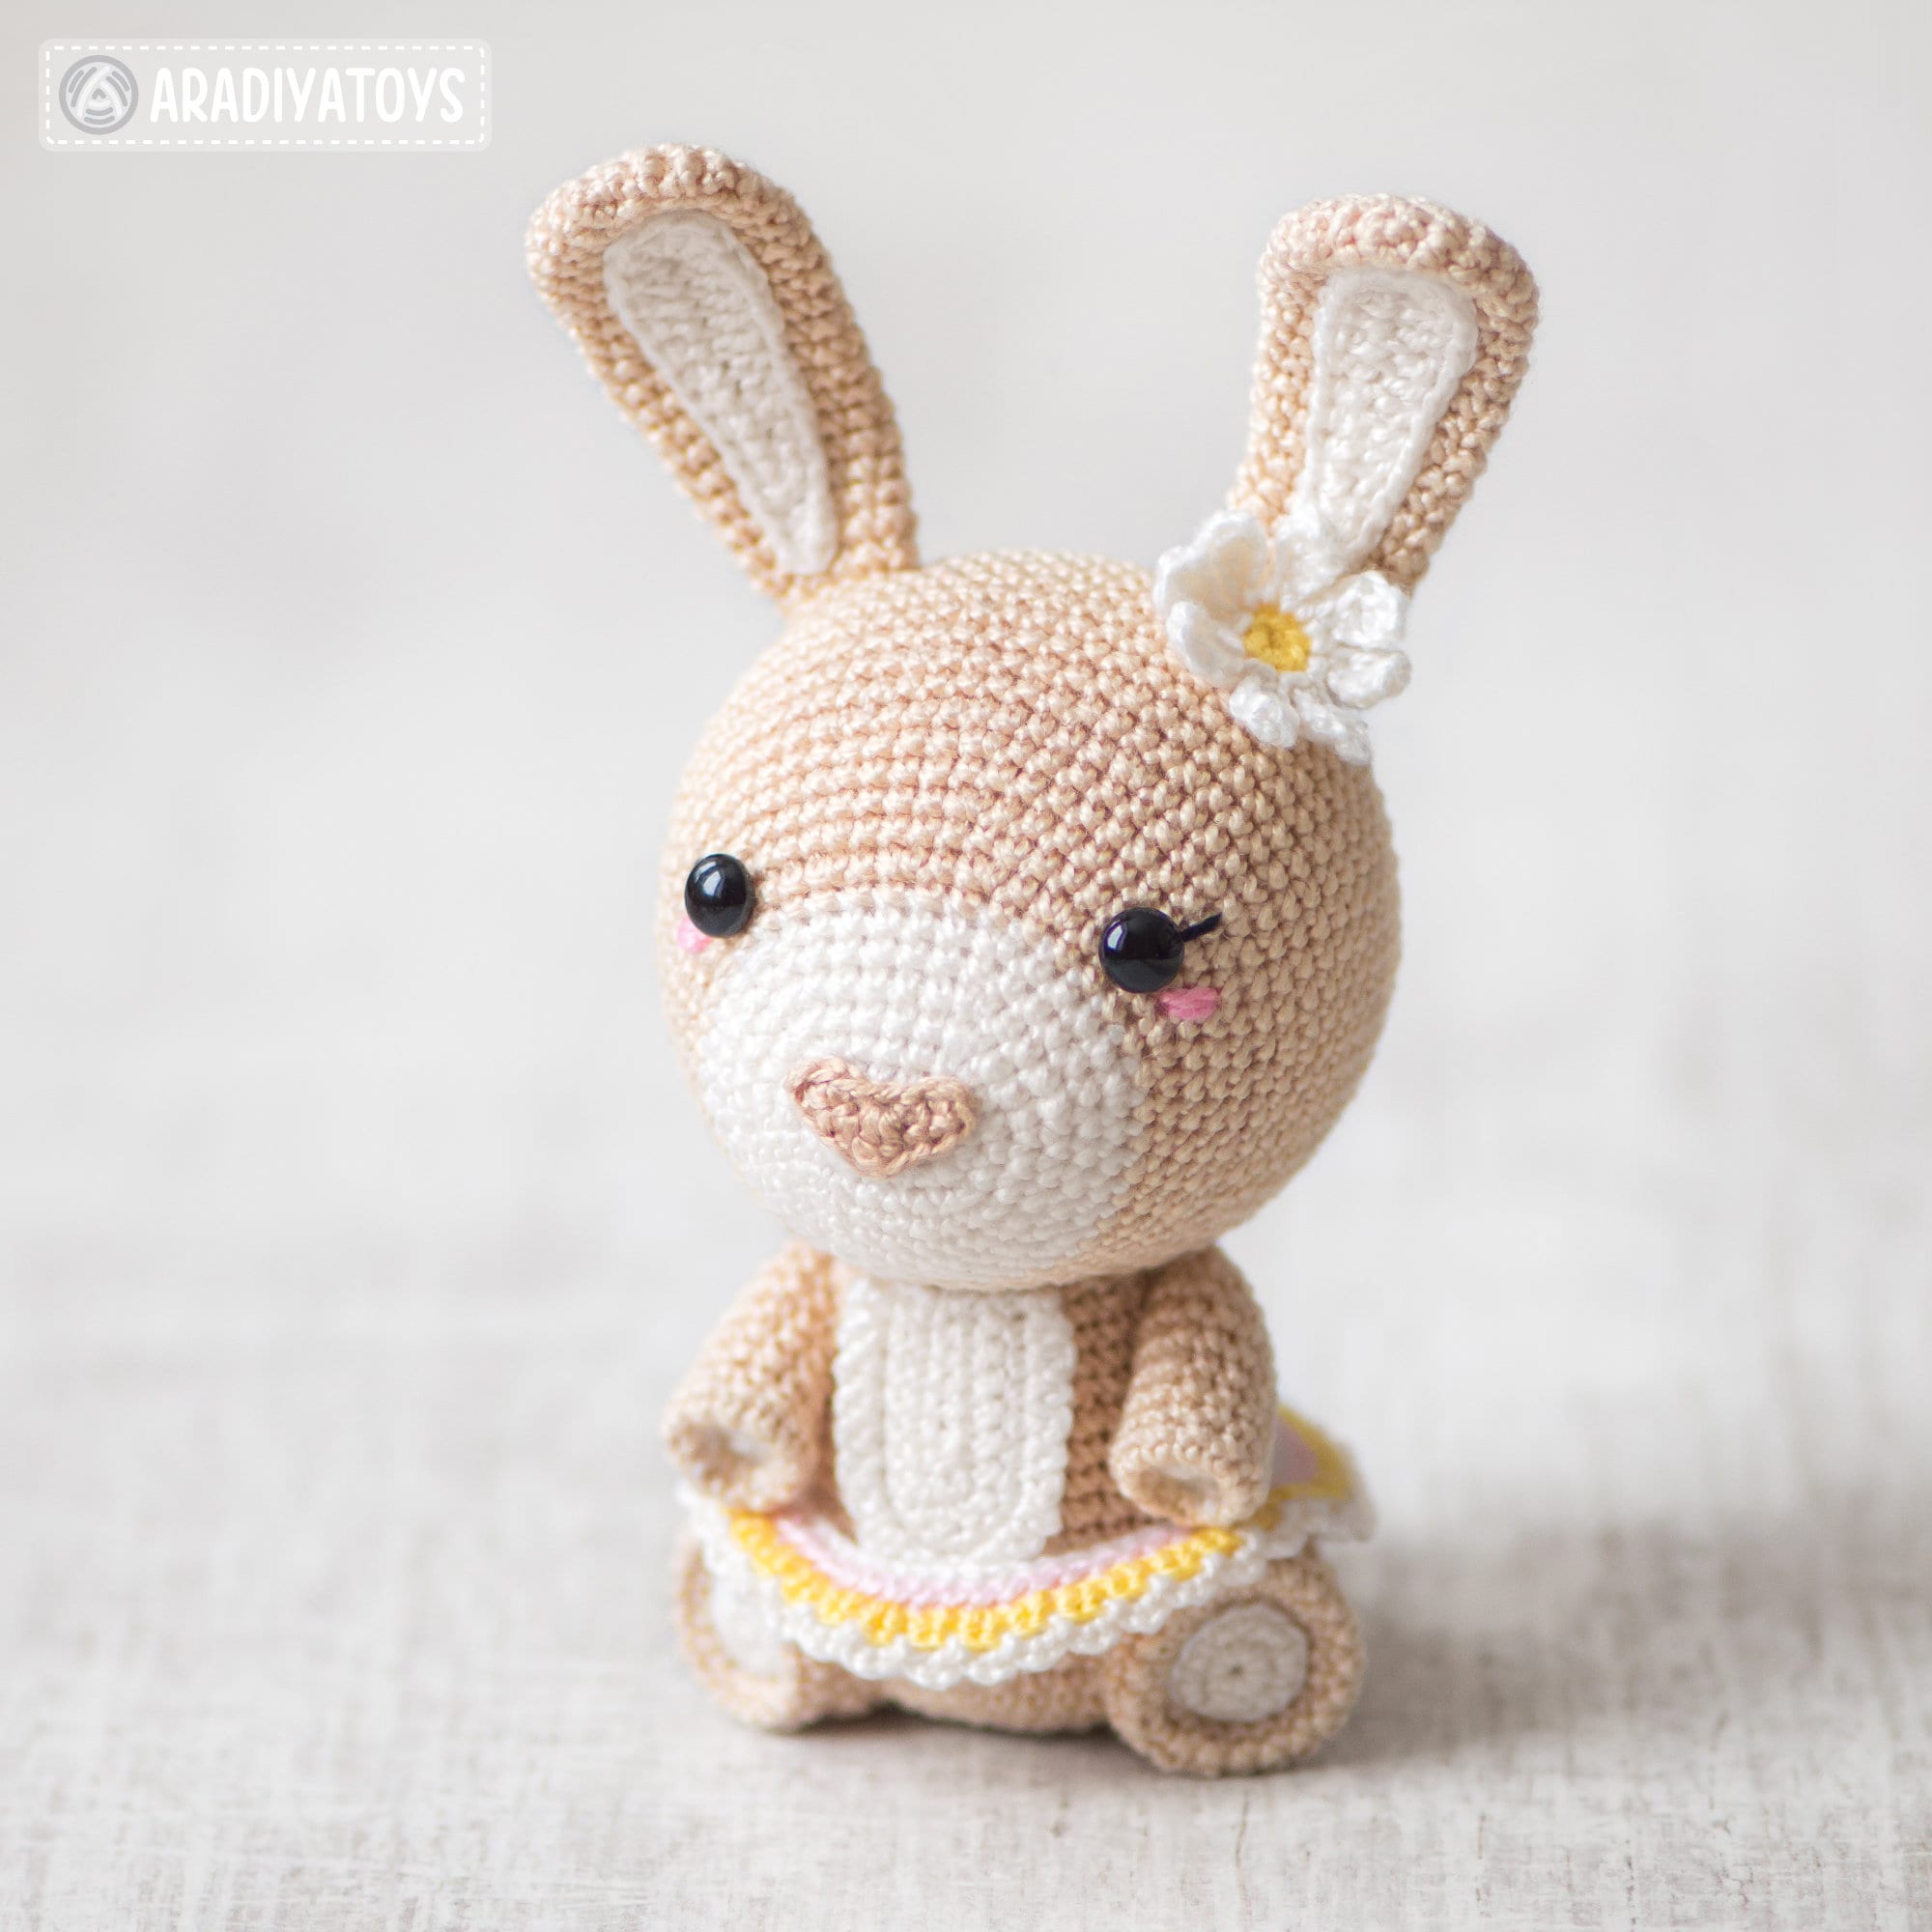 Crochet Pattern of Bunny Emma From aradiyatoys